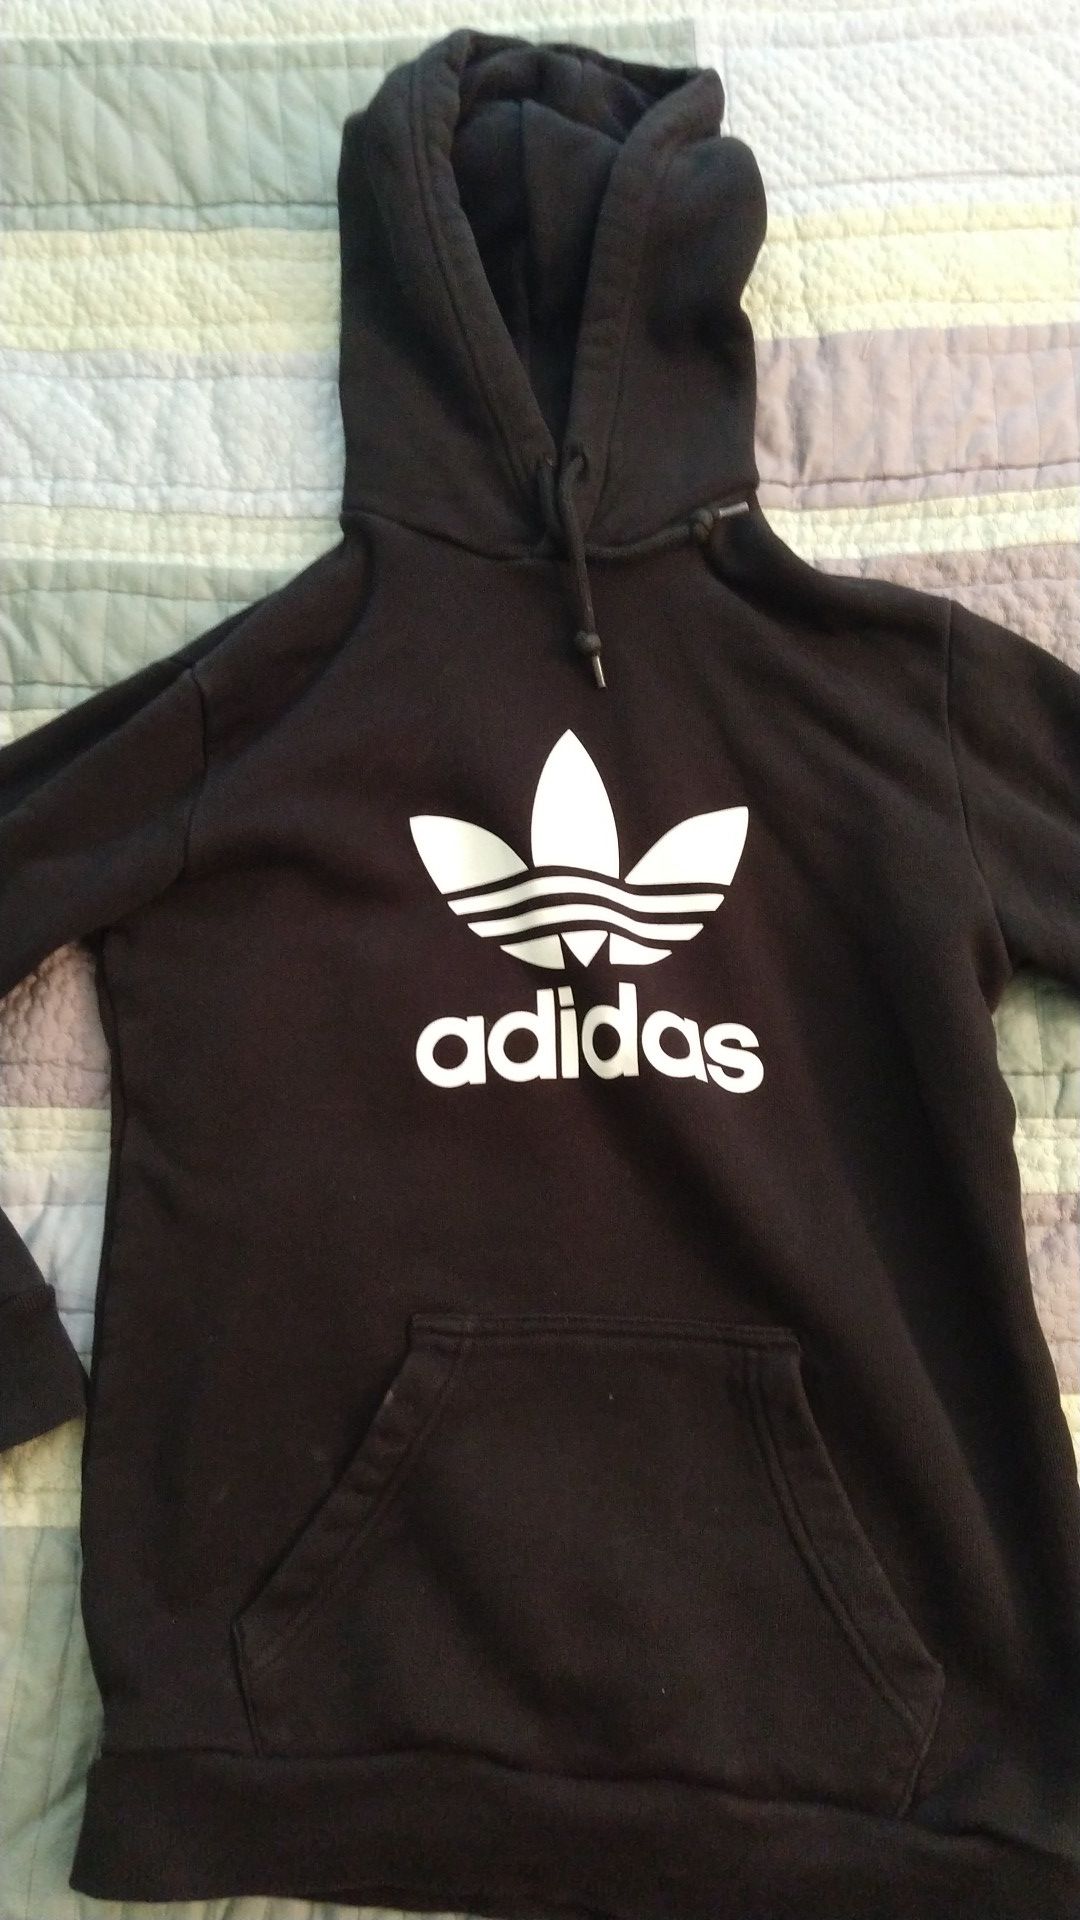 Adidas men's XS hoodie sweatshirt